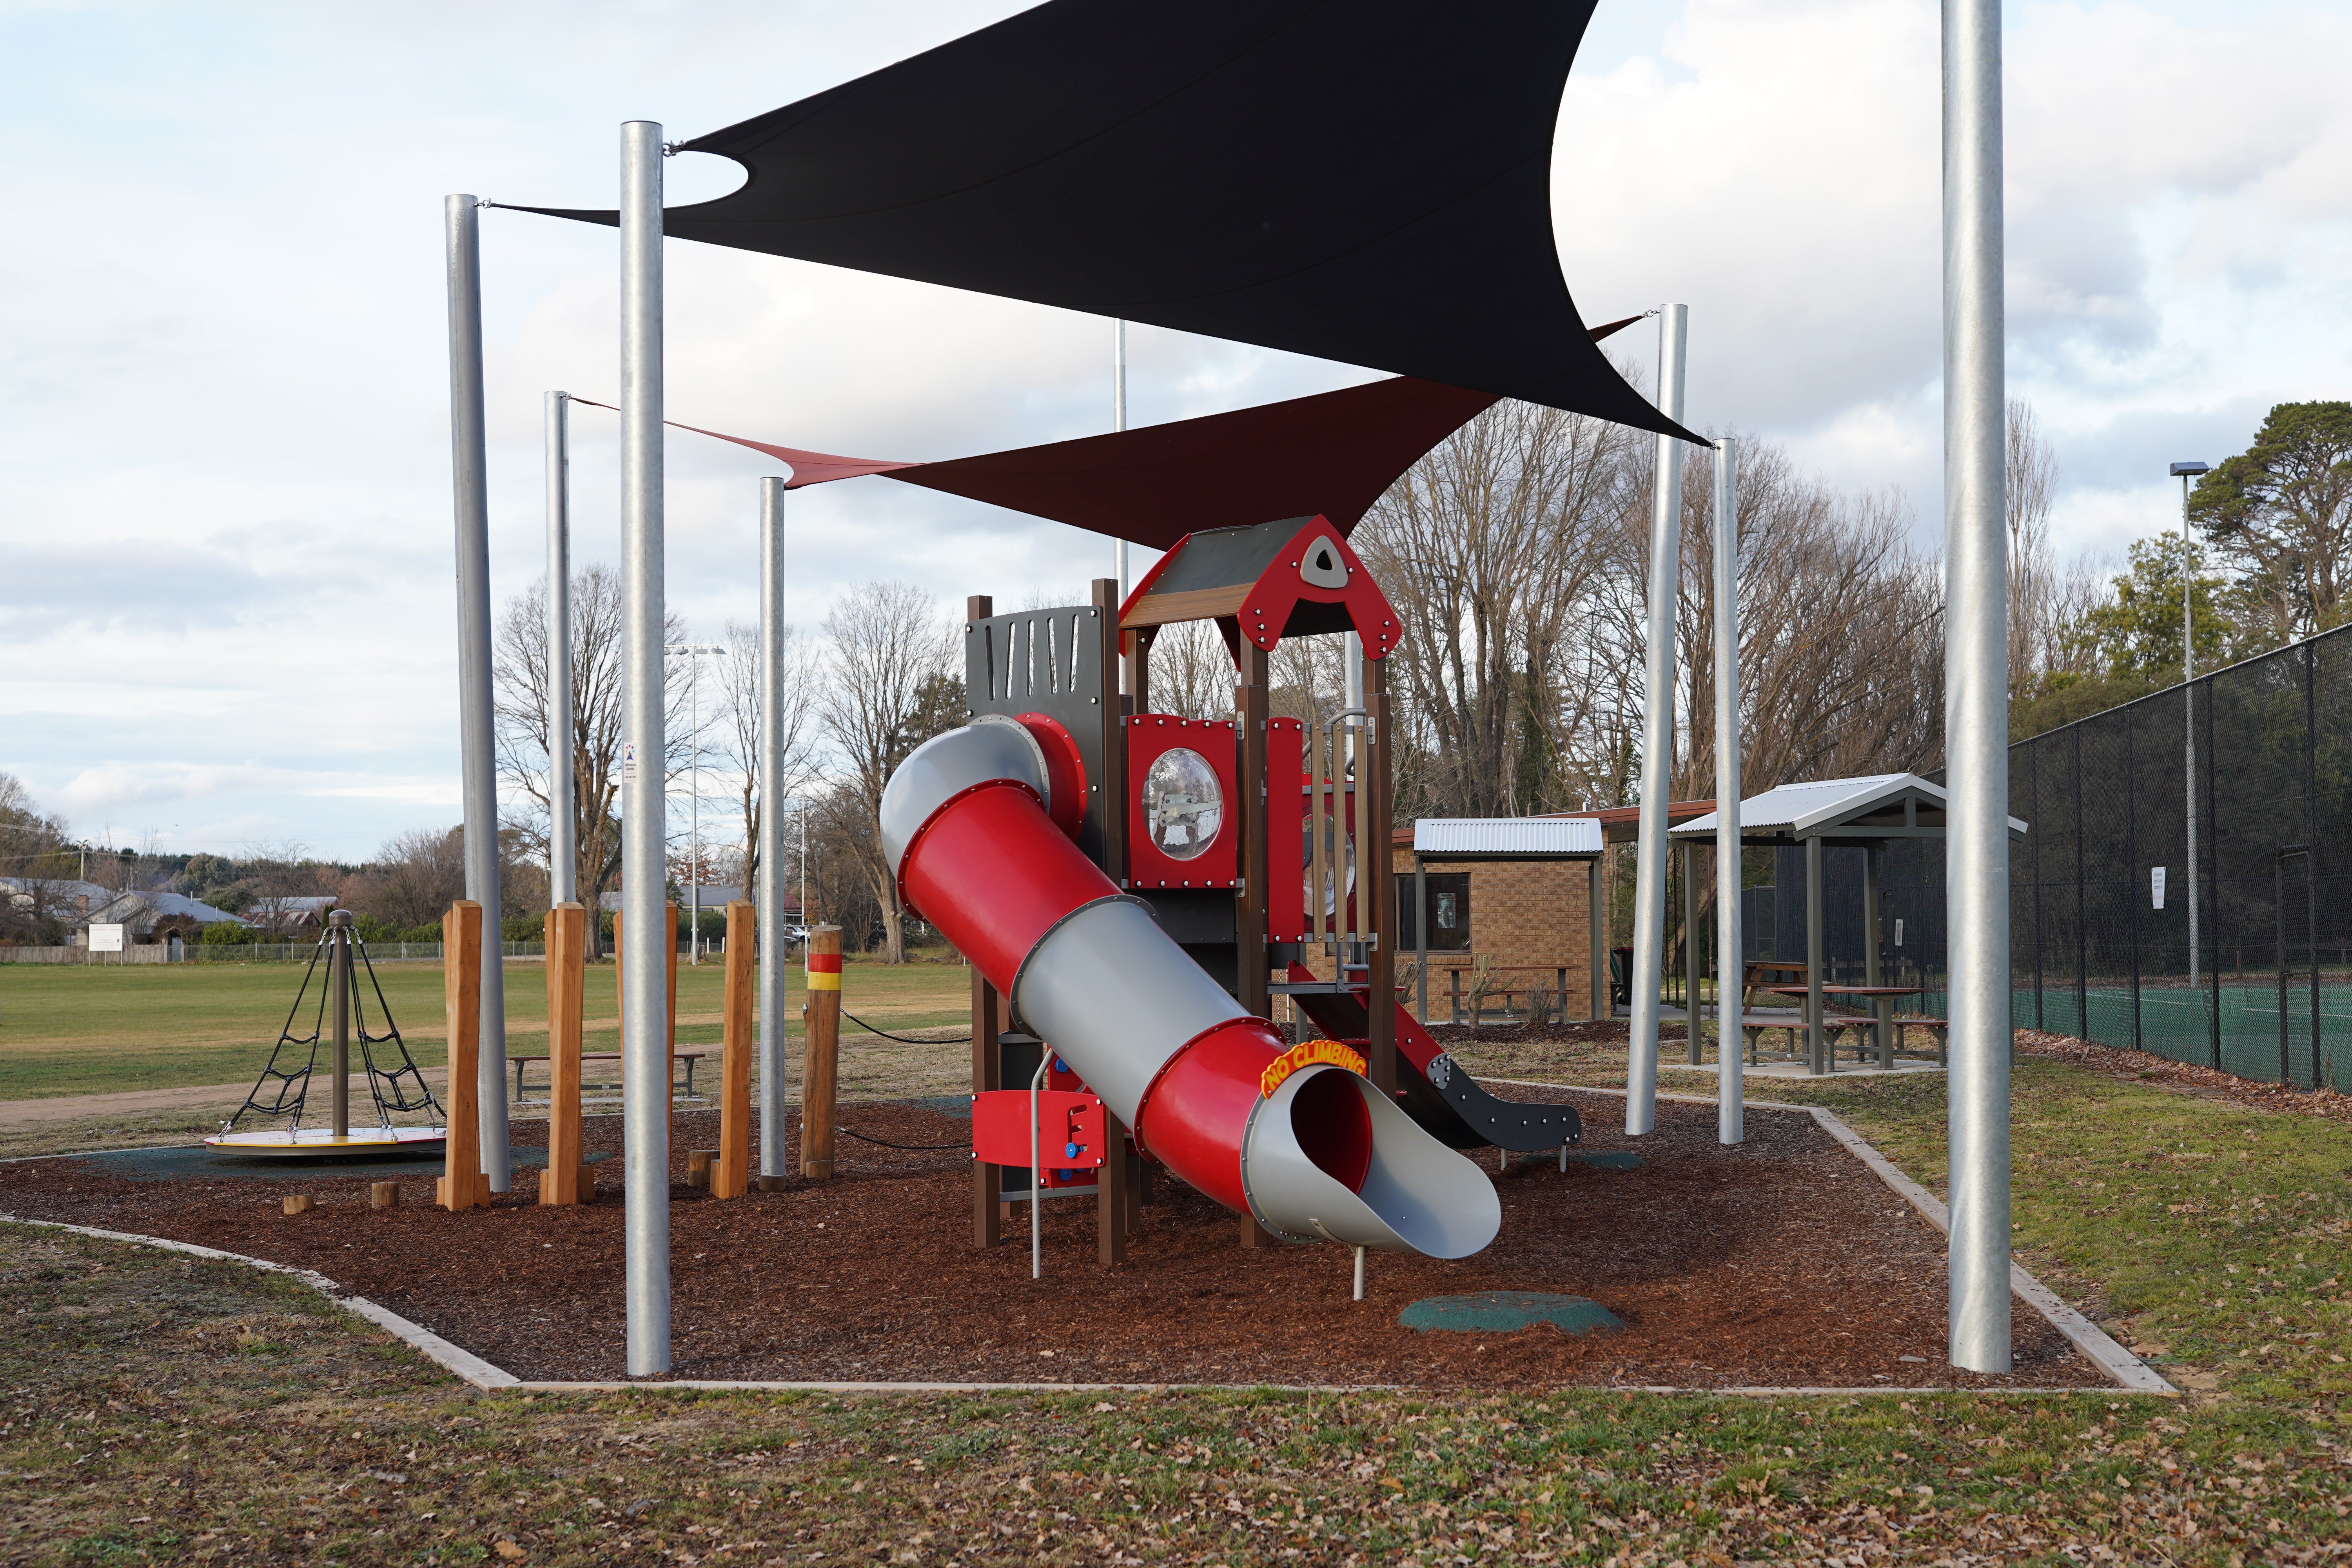 Braidwood Recreation Grounds and Playground - WA Accommodation